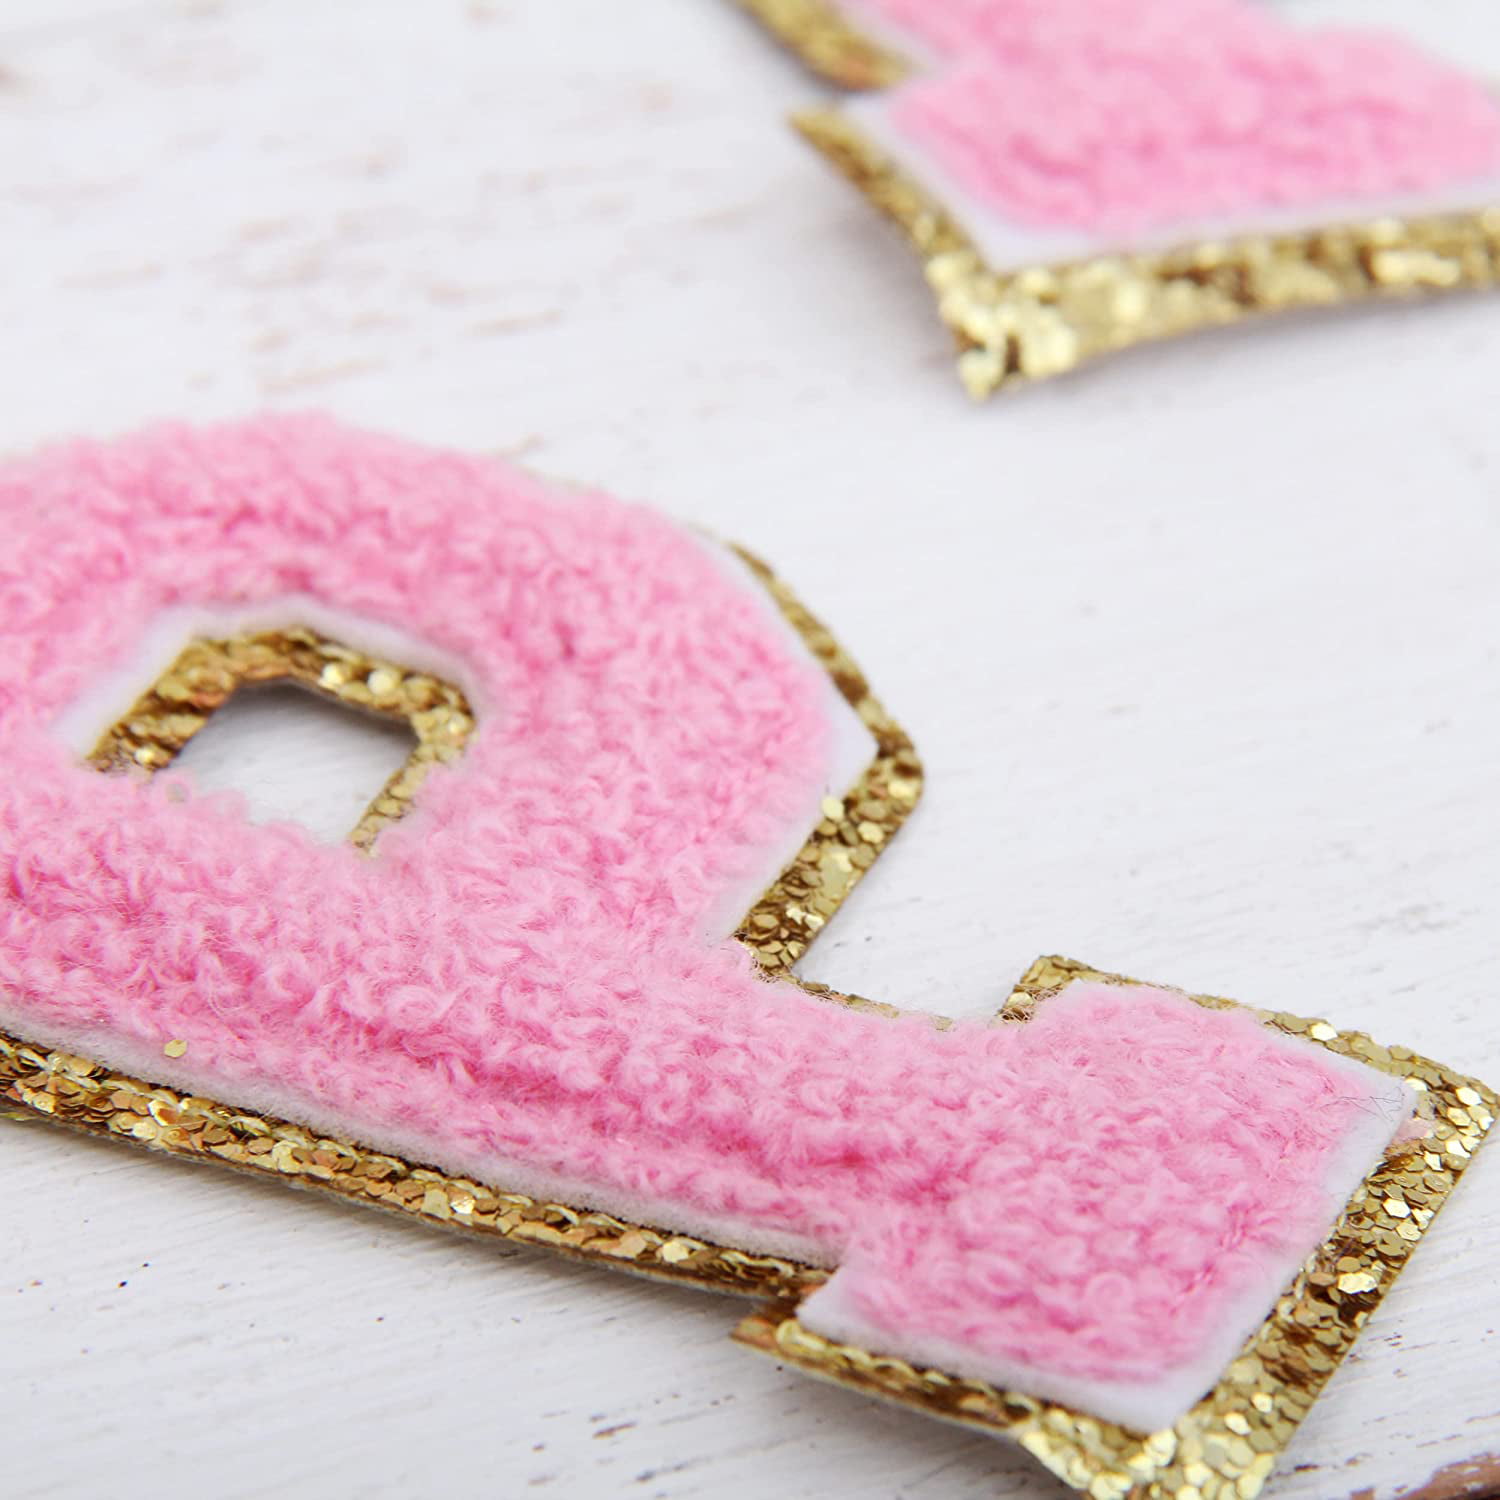 Light Pink Iron-On Glitter Varsity Letter Patches